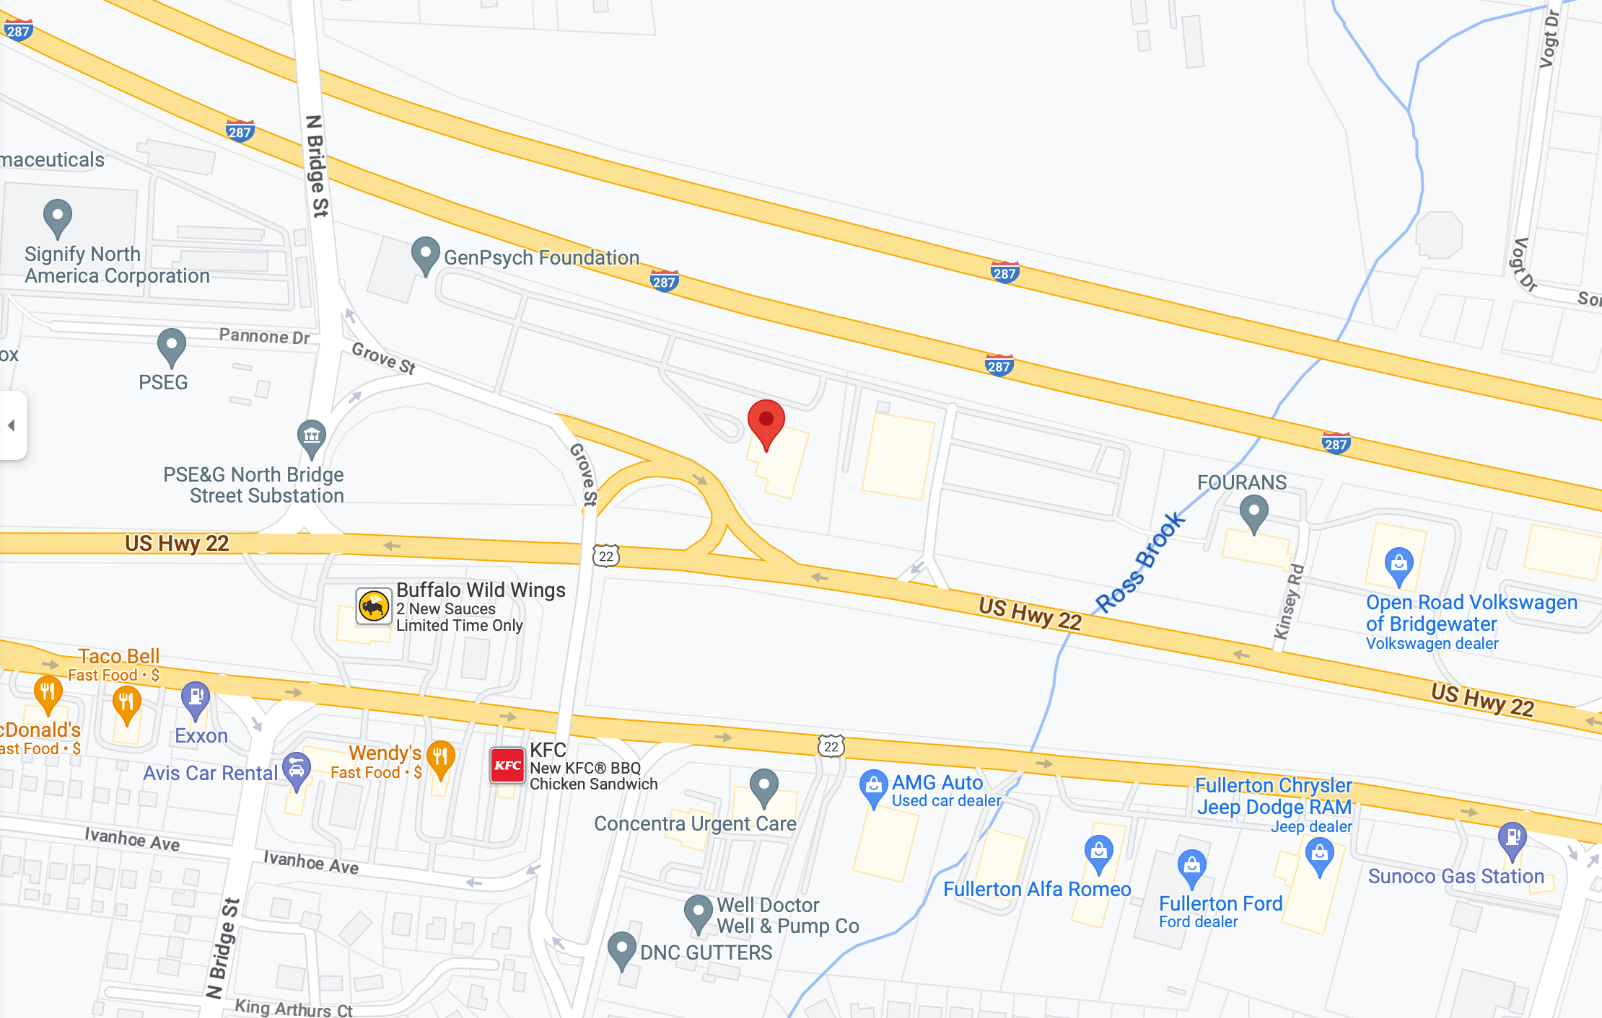 Google Map of Daytona International Speedway